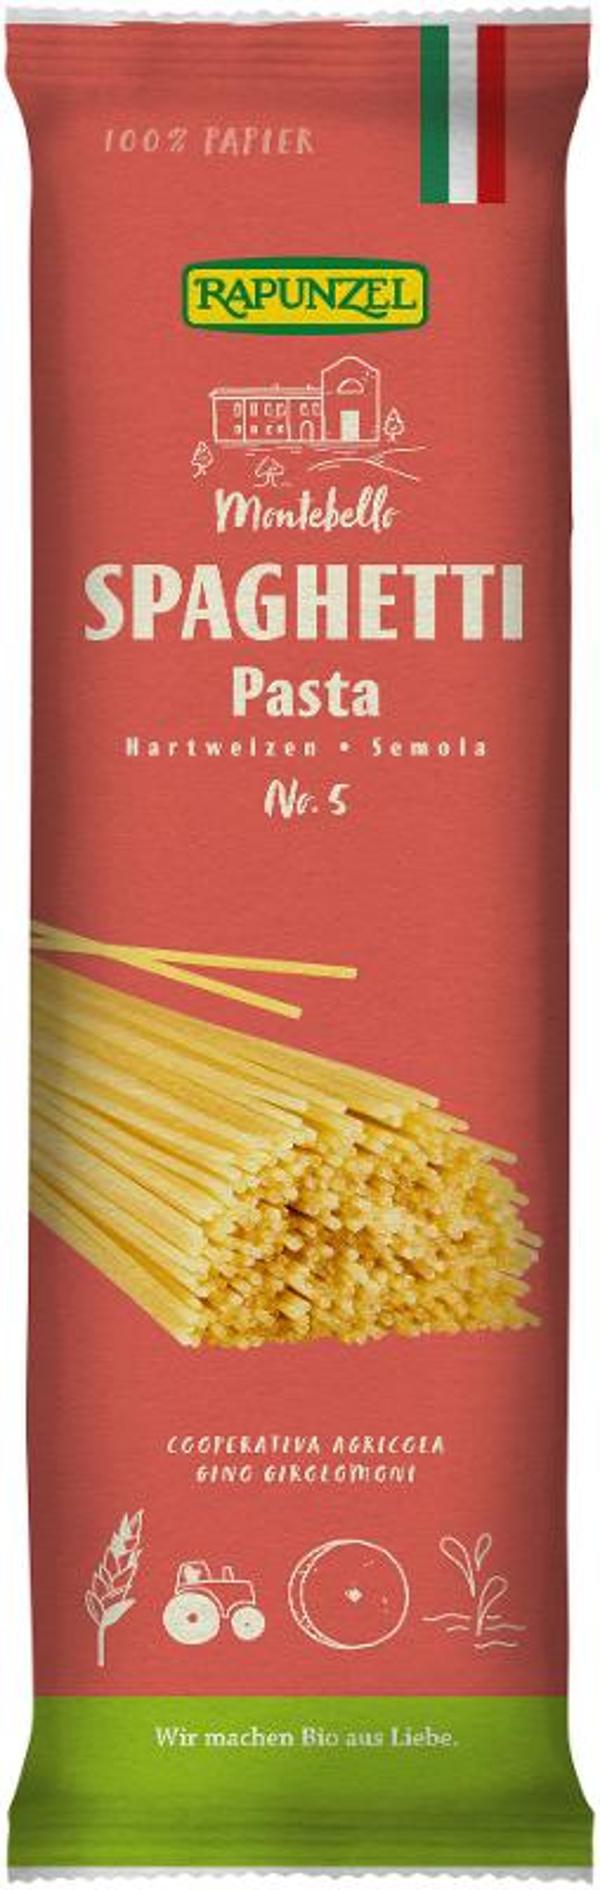 Produktfoto zu Spaghetti Semola  500 g